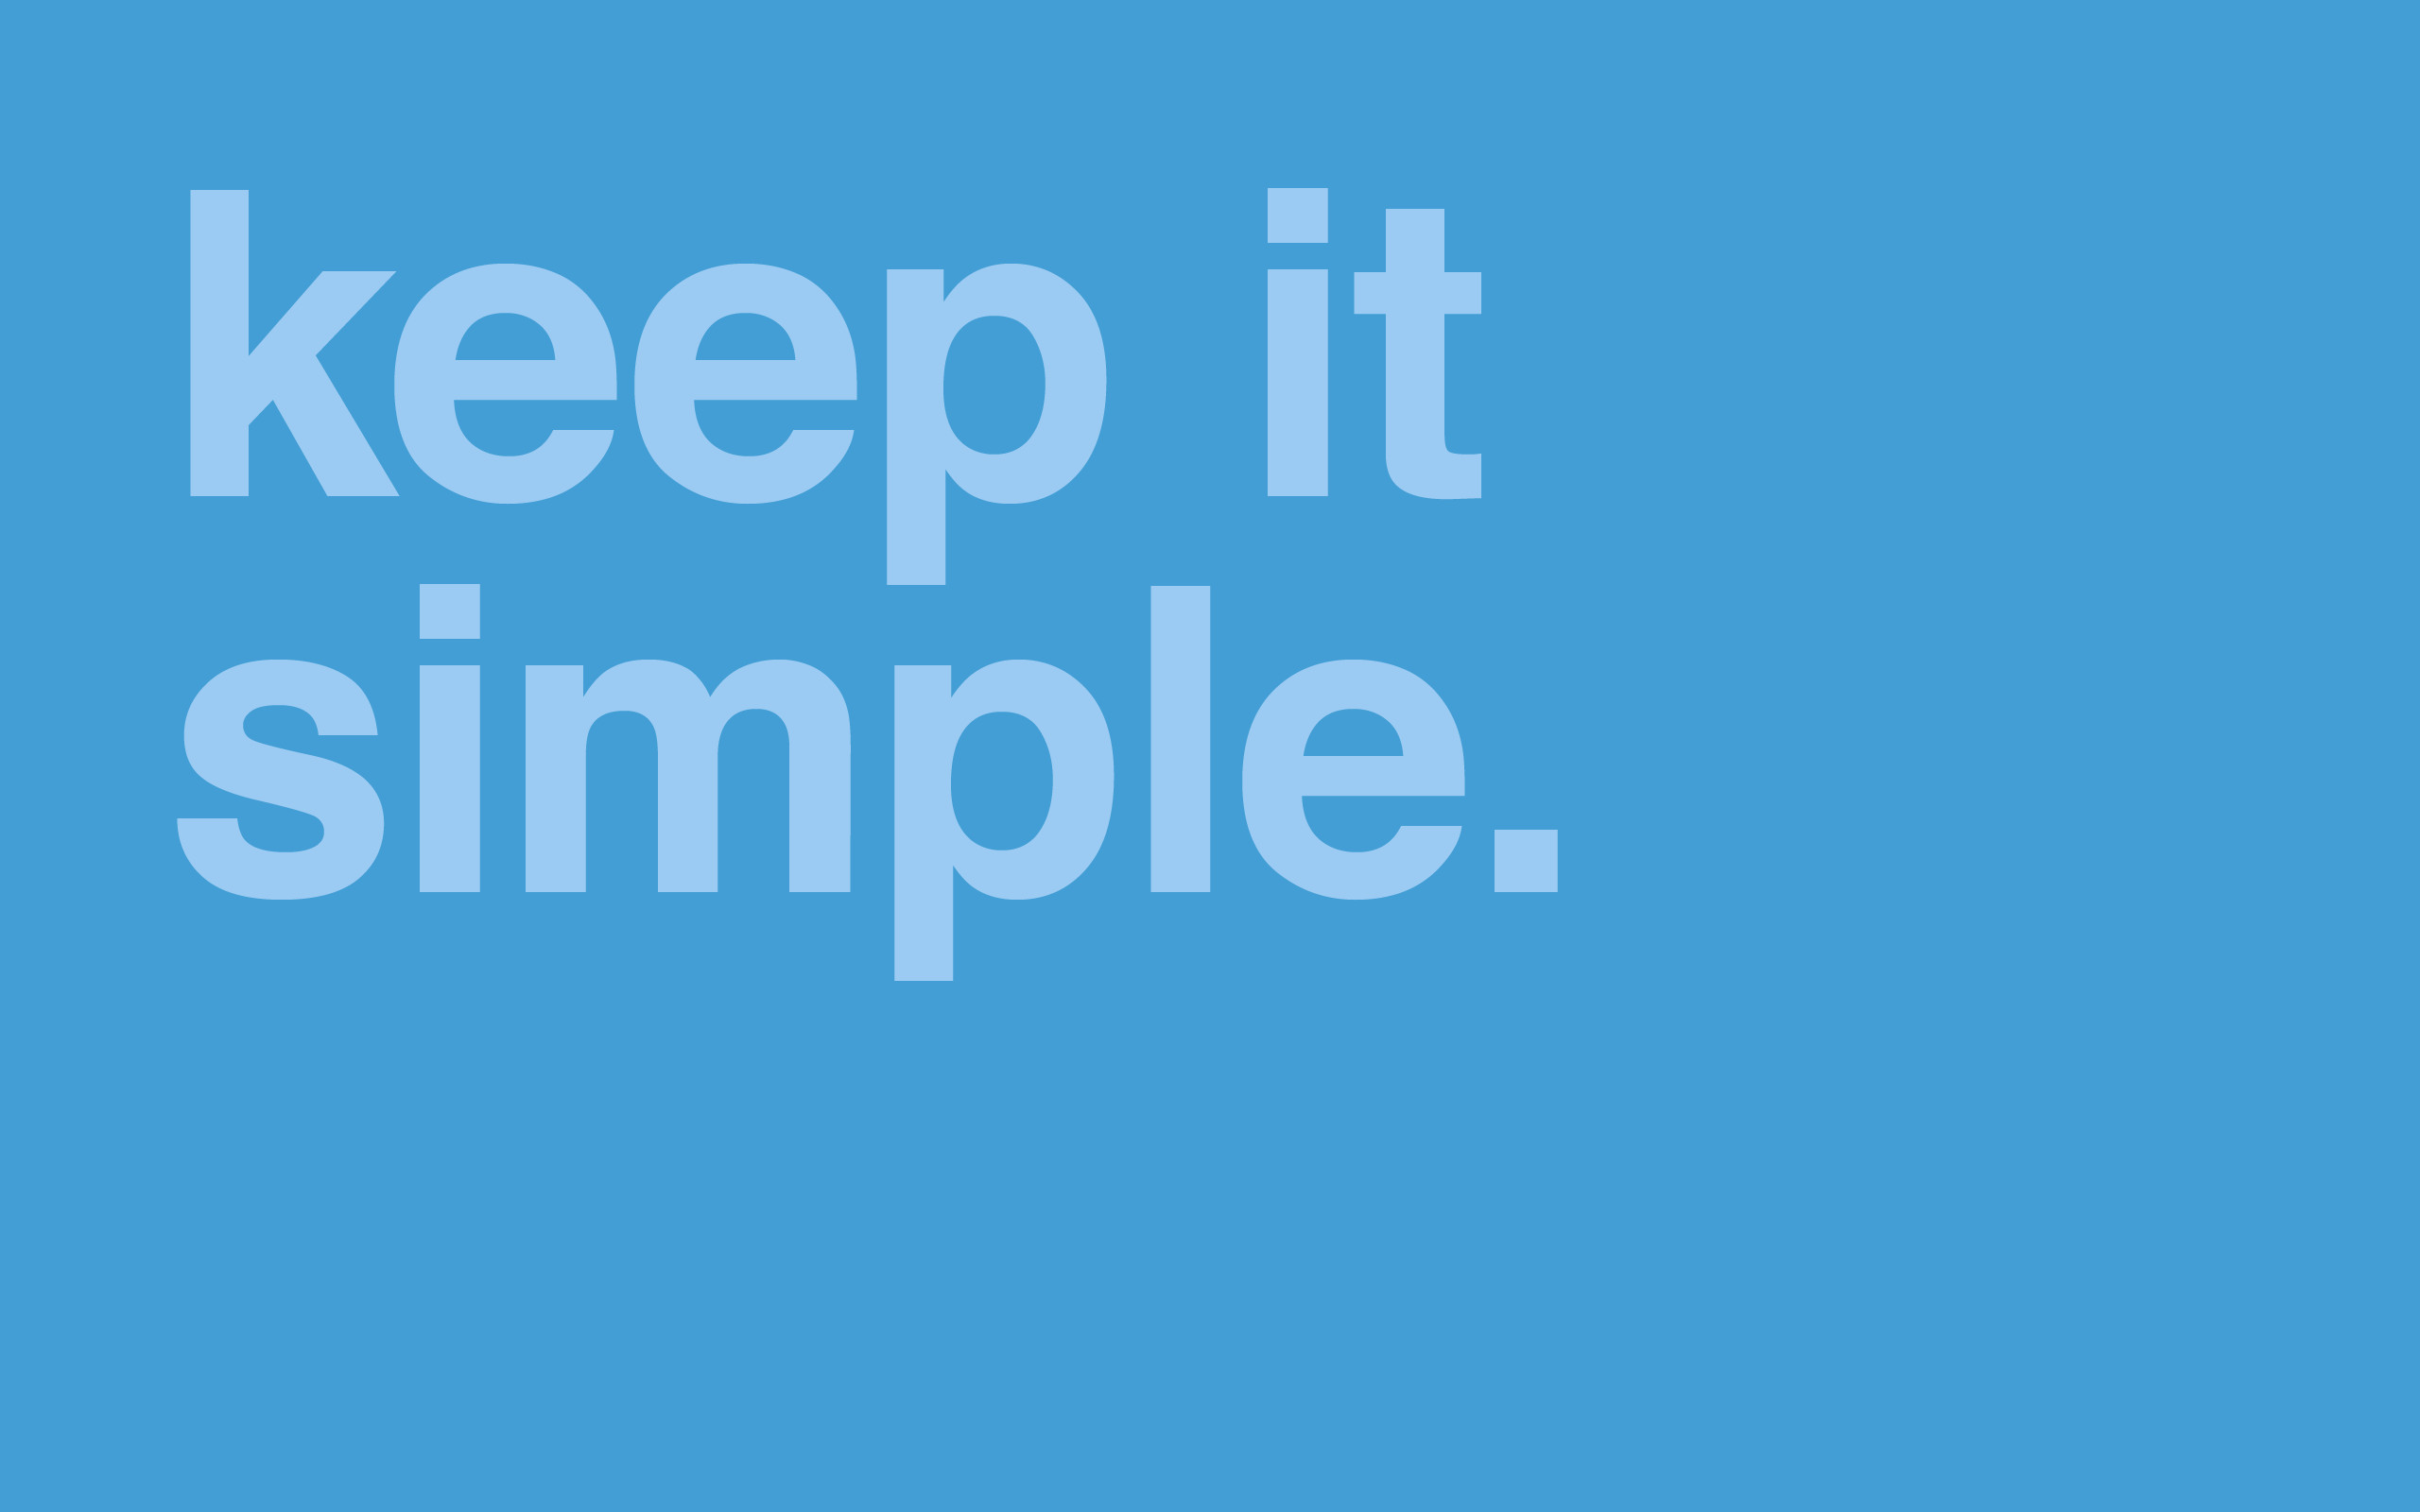 2560x1600 minimal-desktop-wallpaper-keep-it-simple : The Buzz Bin